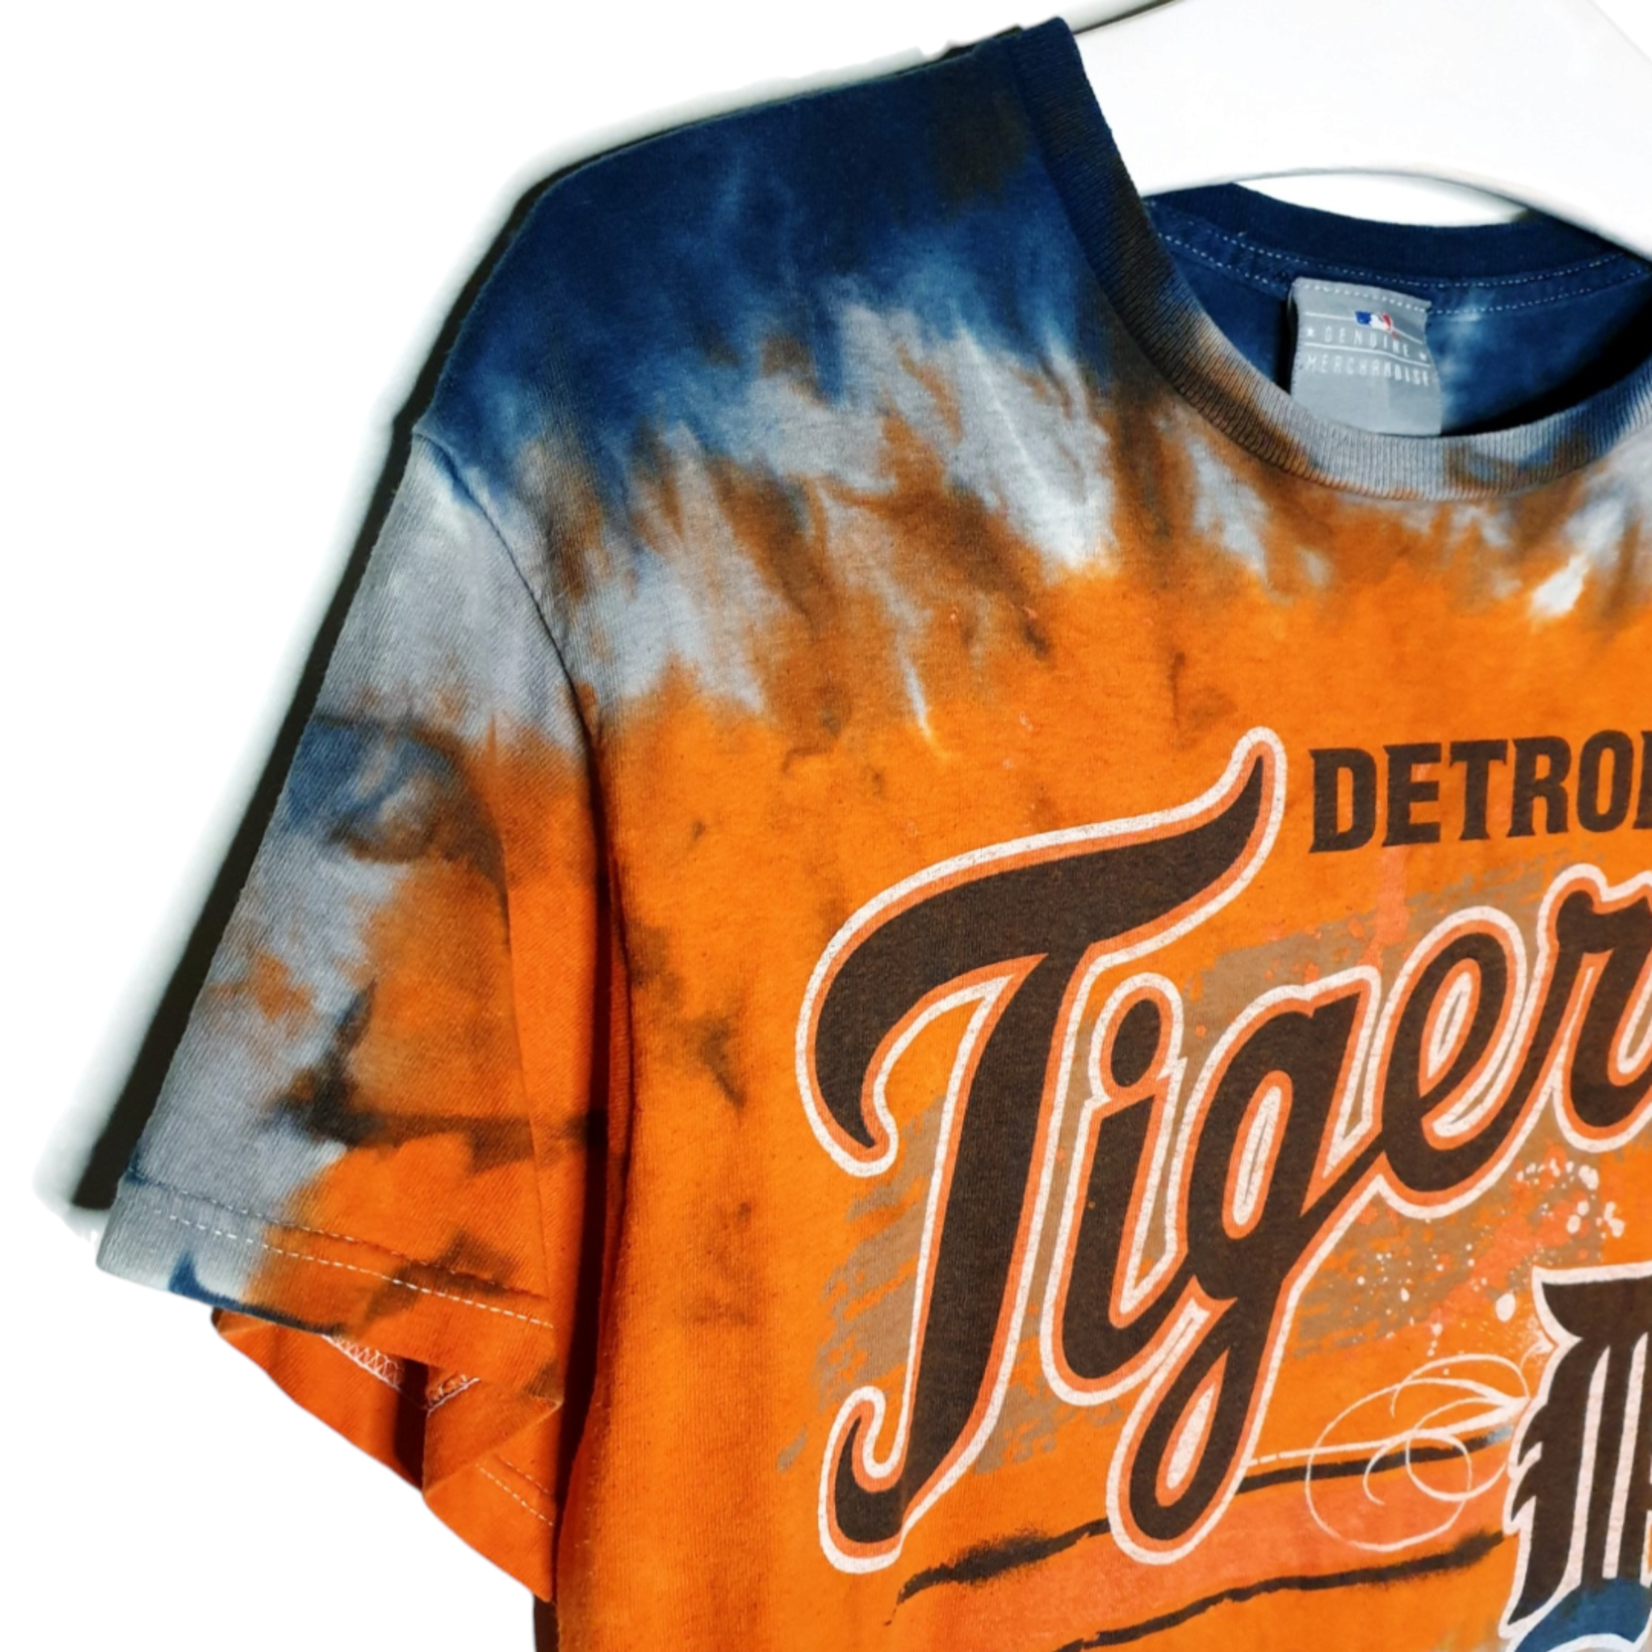 Genuine Merchandise Origneel Genuine Merchanidise vintage MLB shirt Detroit Tigers